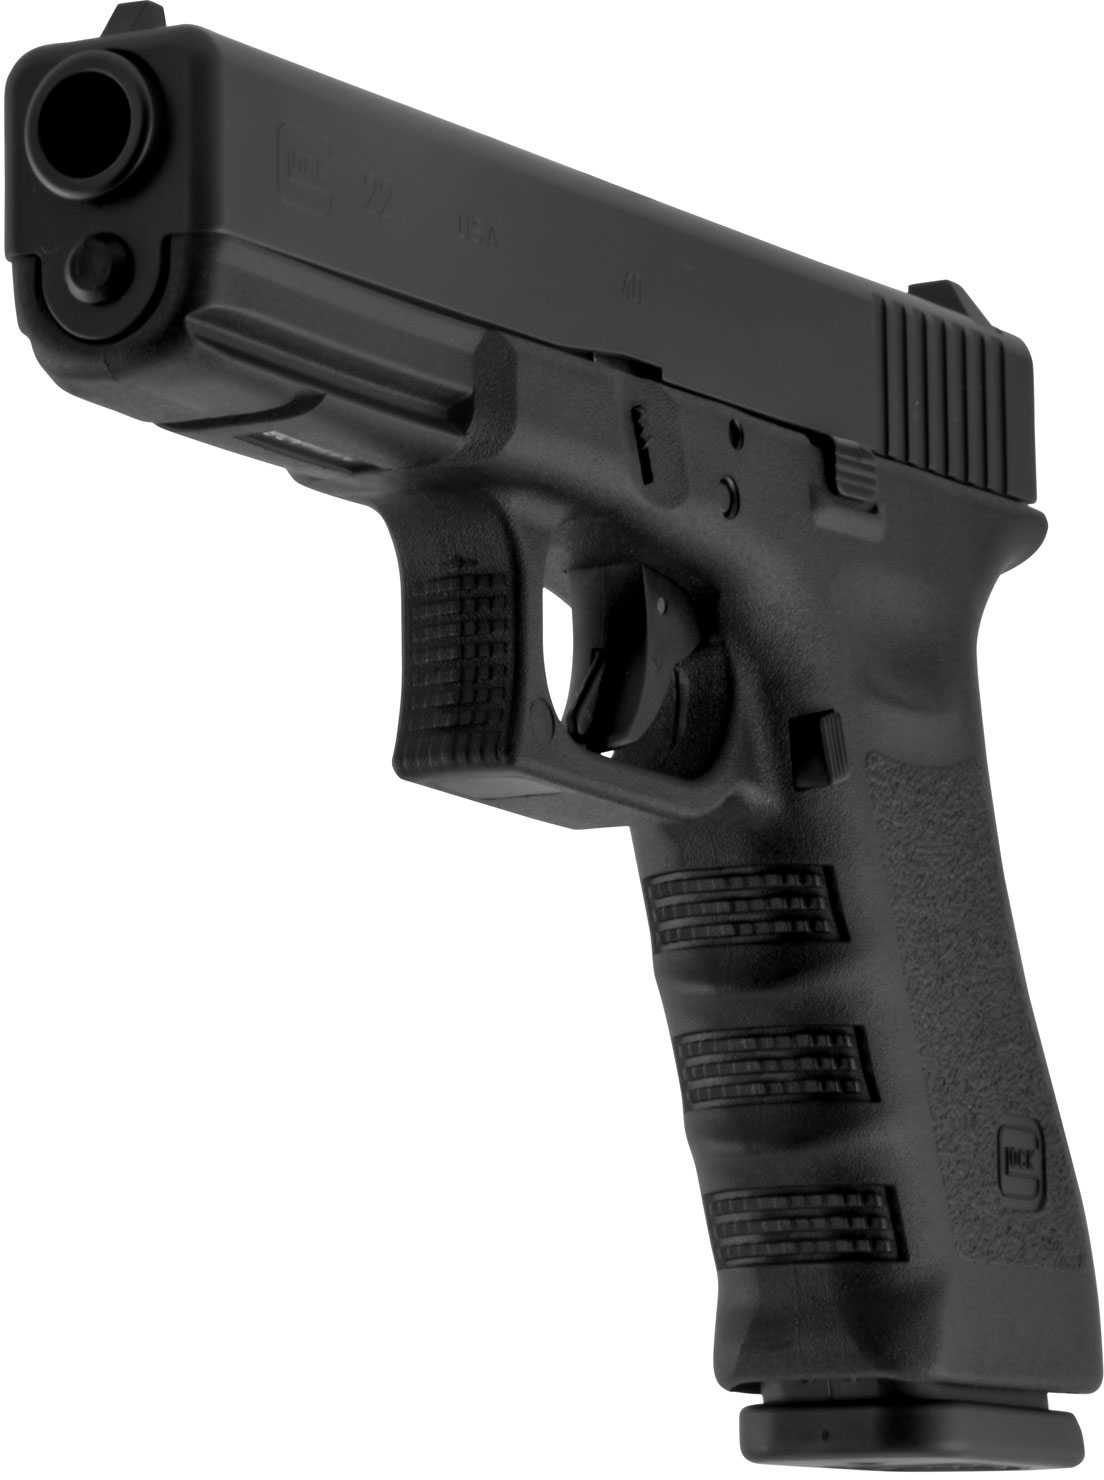 Glock 22 Semi Automatic Pistol 40 S&W Fixed Sights 15 Round 4.49" Barrel UI2250203